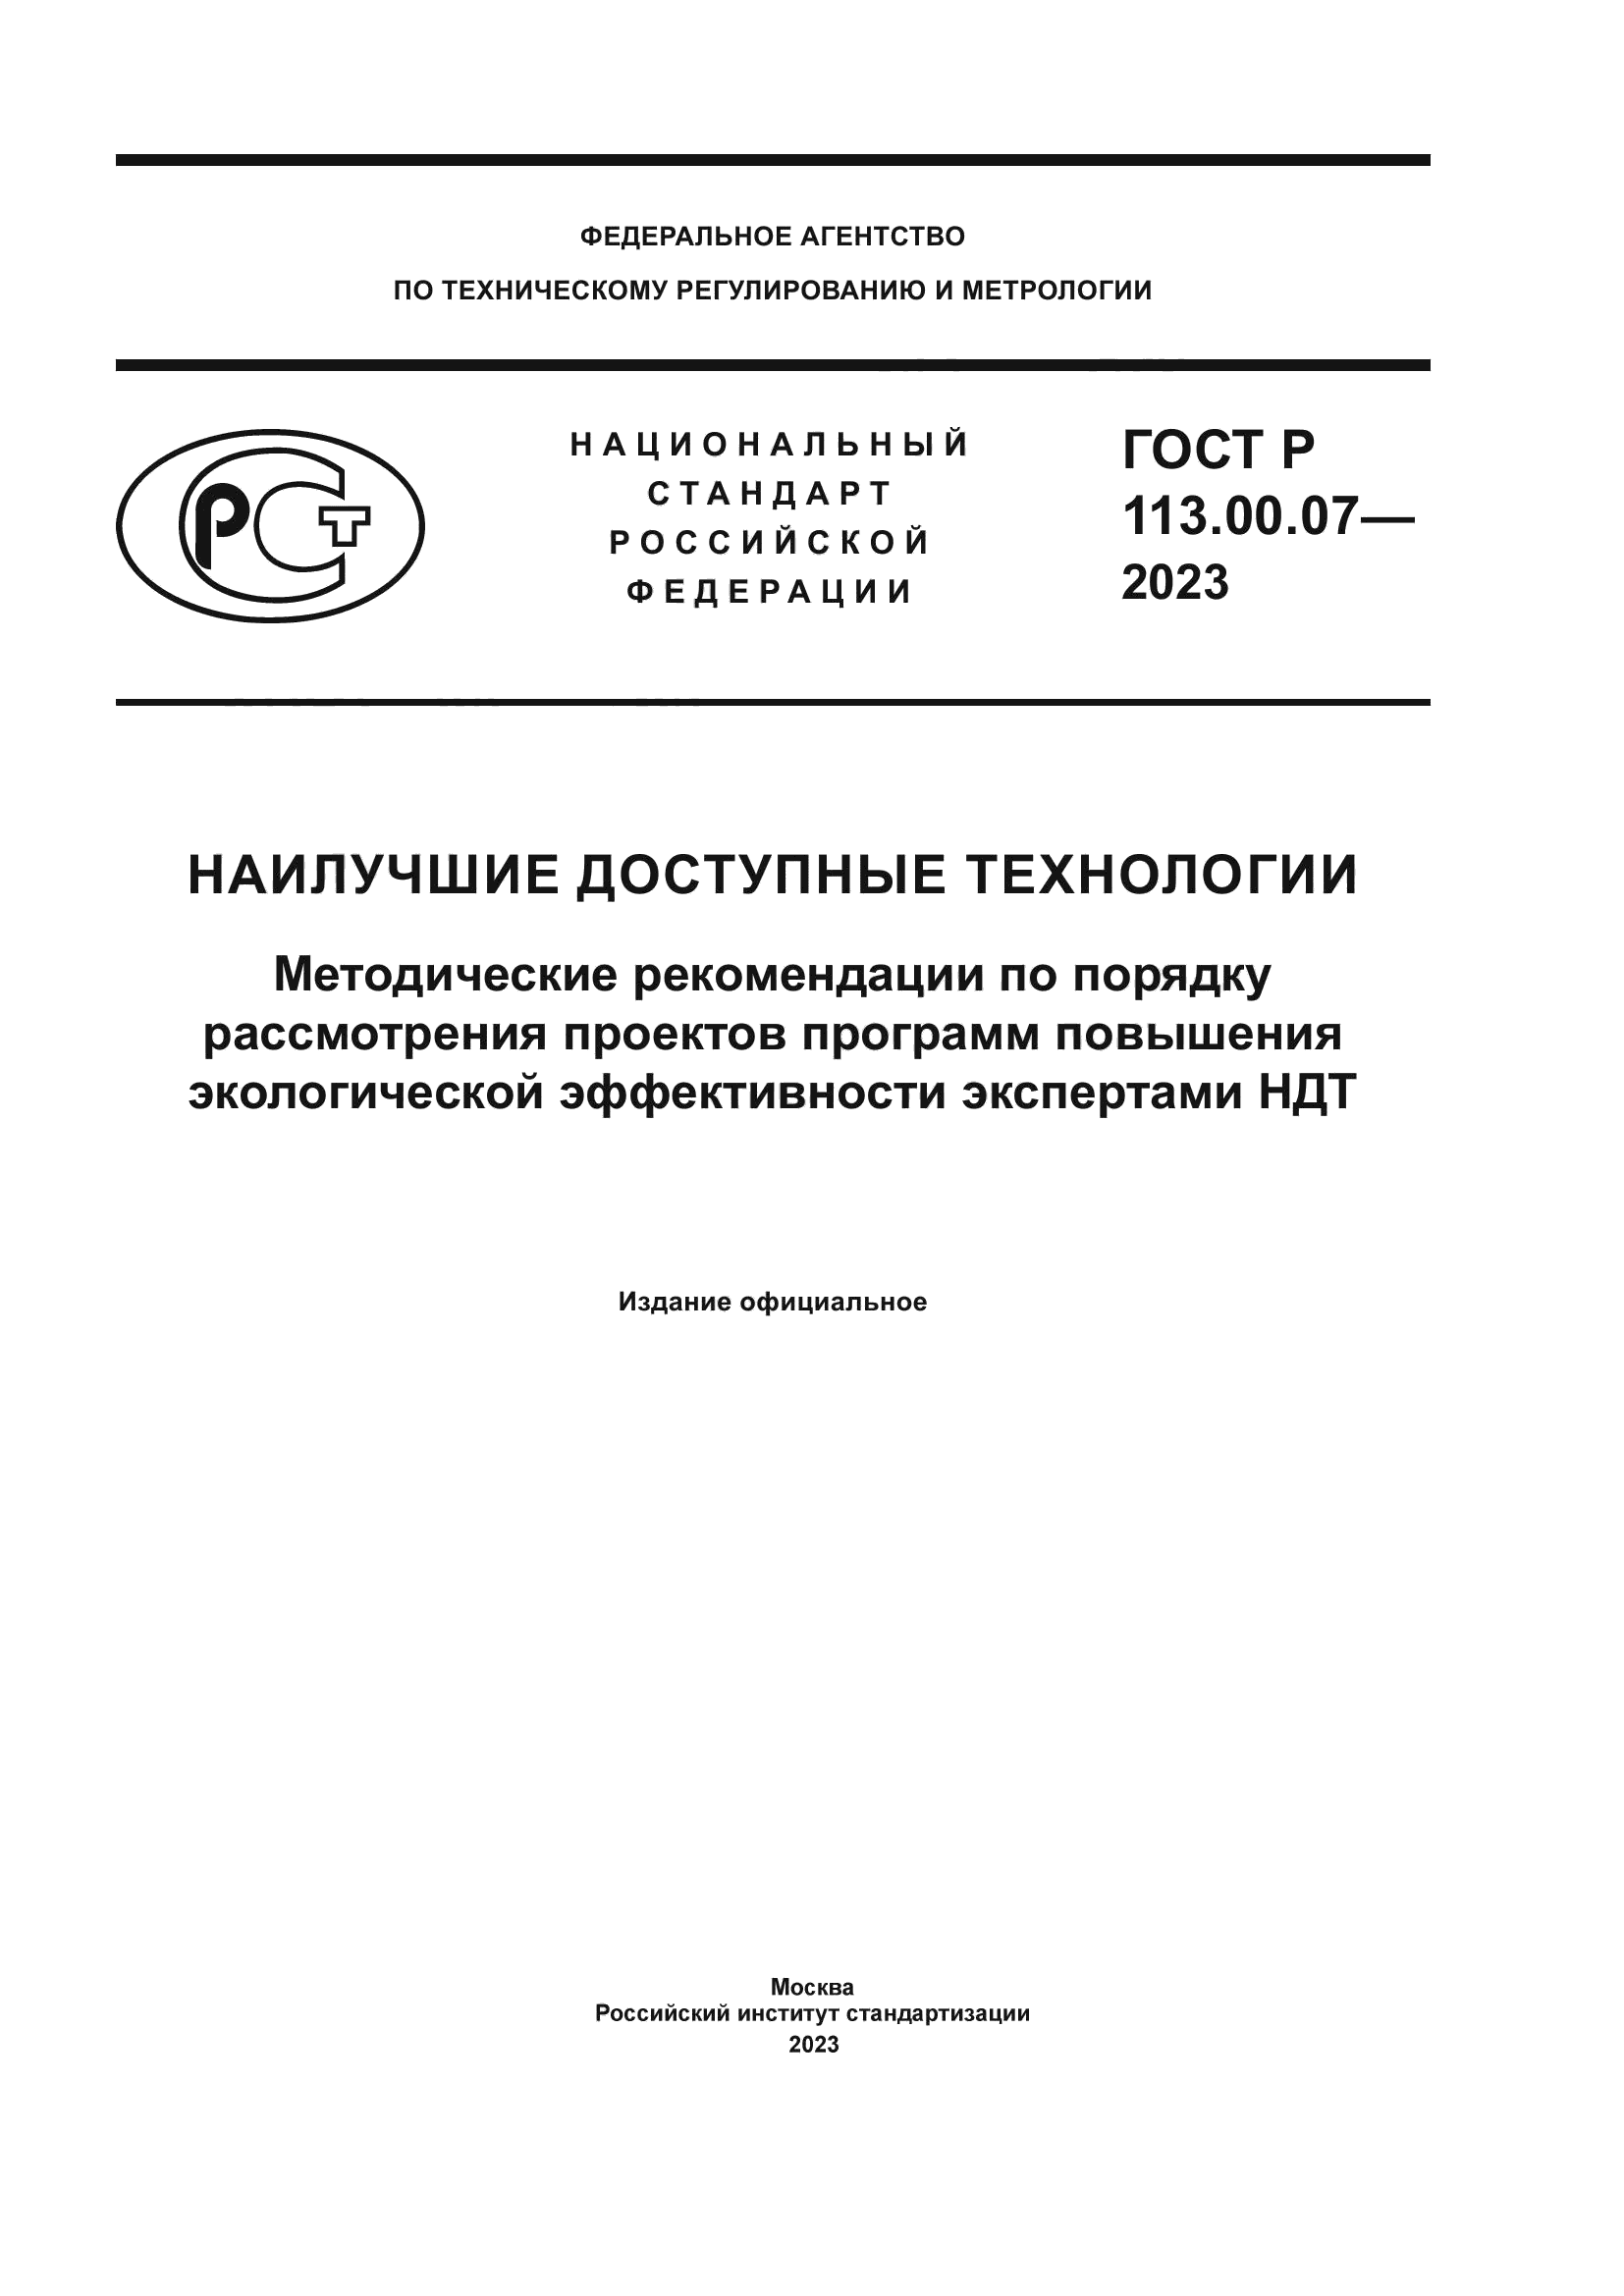 ГОСТ Р 113.00.07-2023